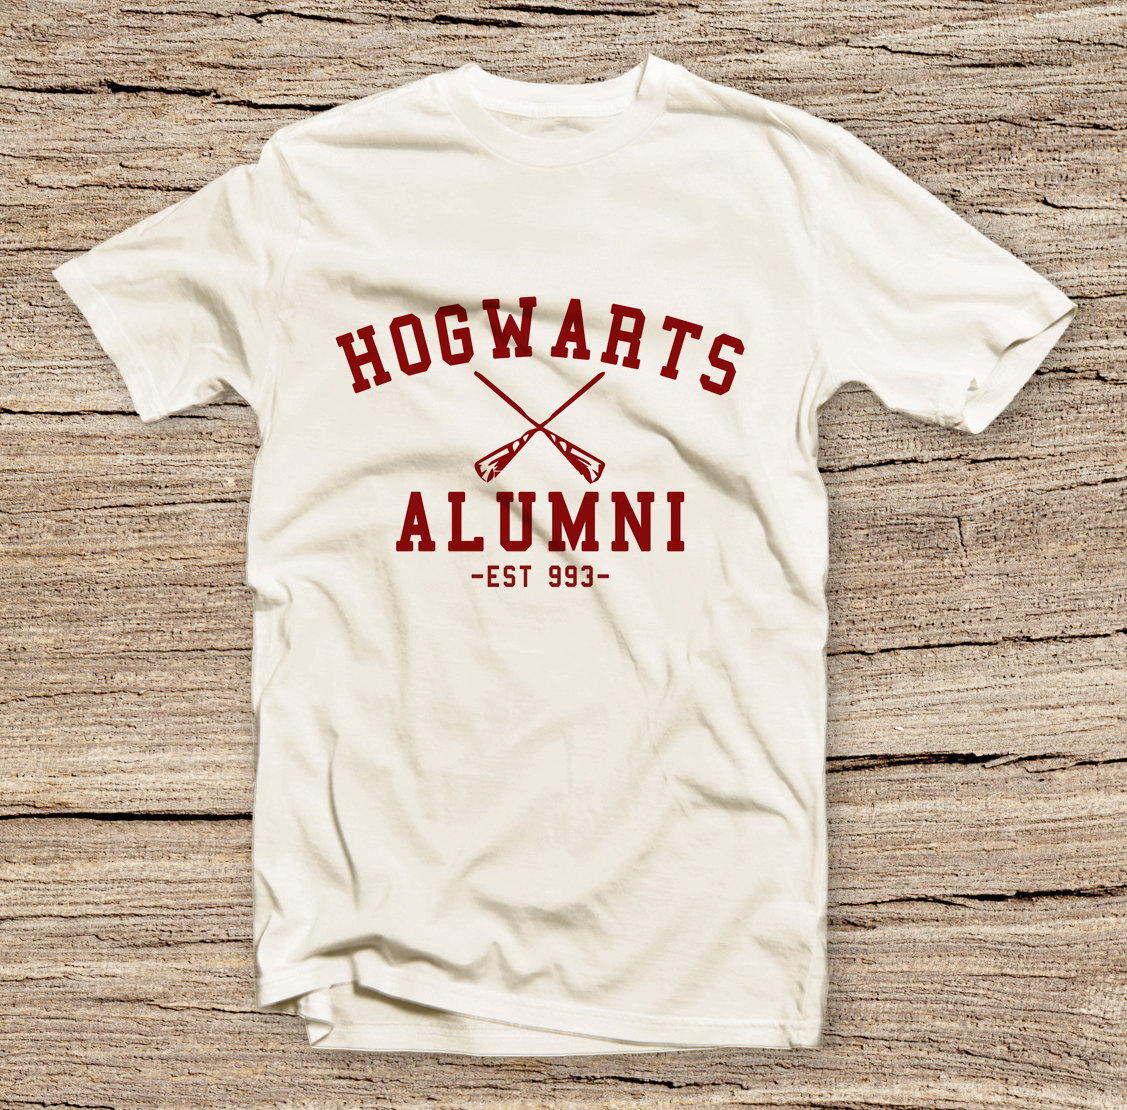 Pts-162 Hogwarts Alumni Shirt Harry Potter Shirts Tee Shirt Unisex T-shirt, Fashion Style Printed T-shirt